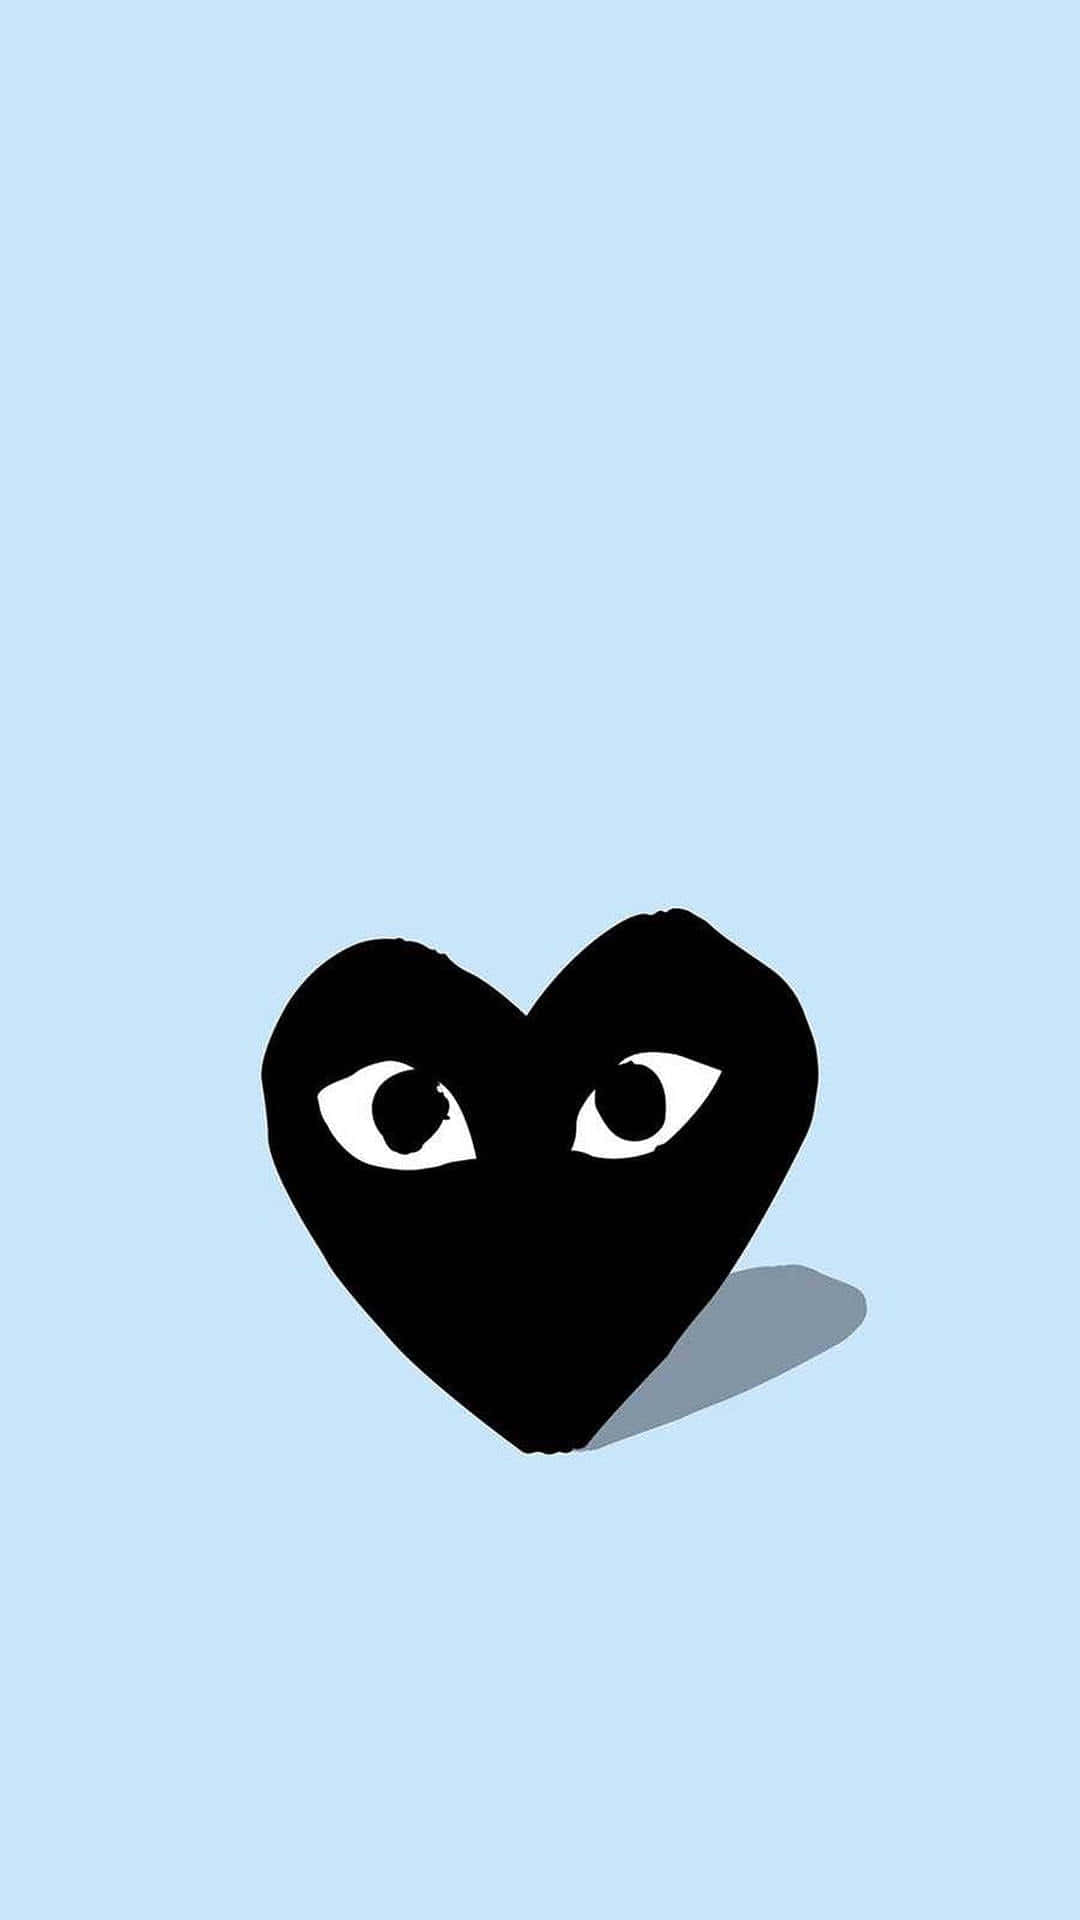 Black heart of love